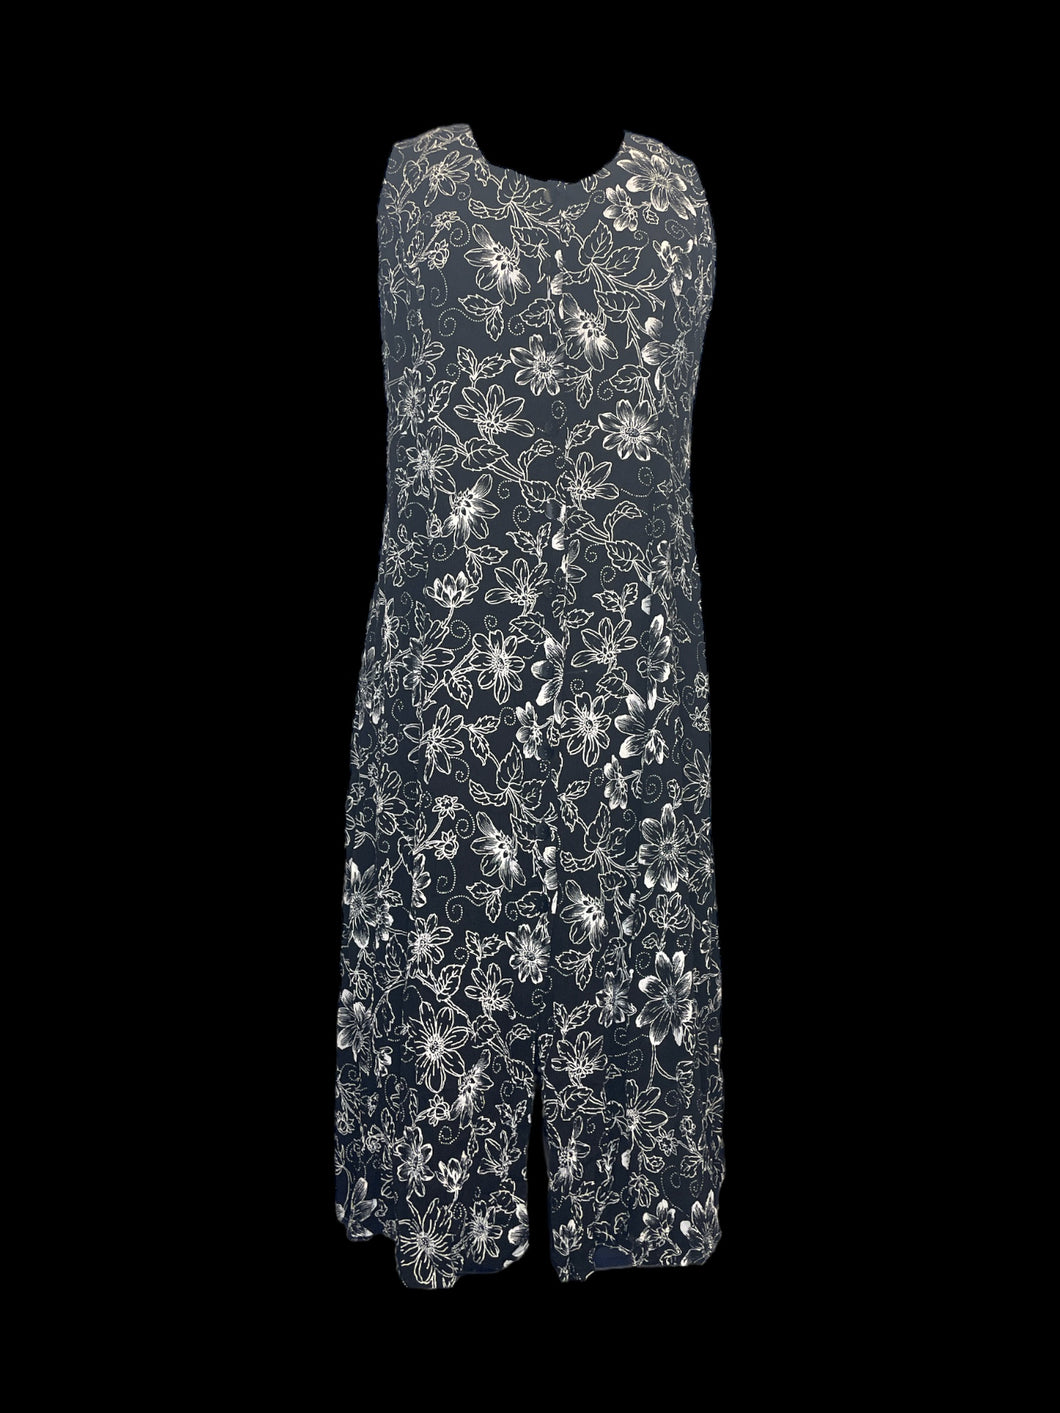 L Vintage black & white floral sleeveless button-up midi dress w/ textured fabric